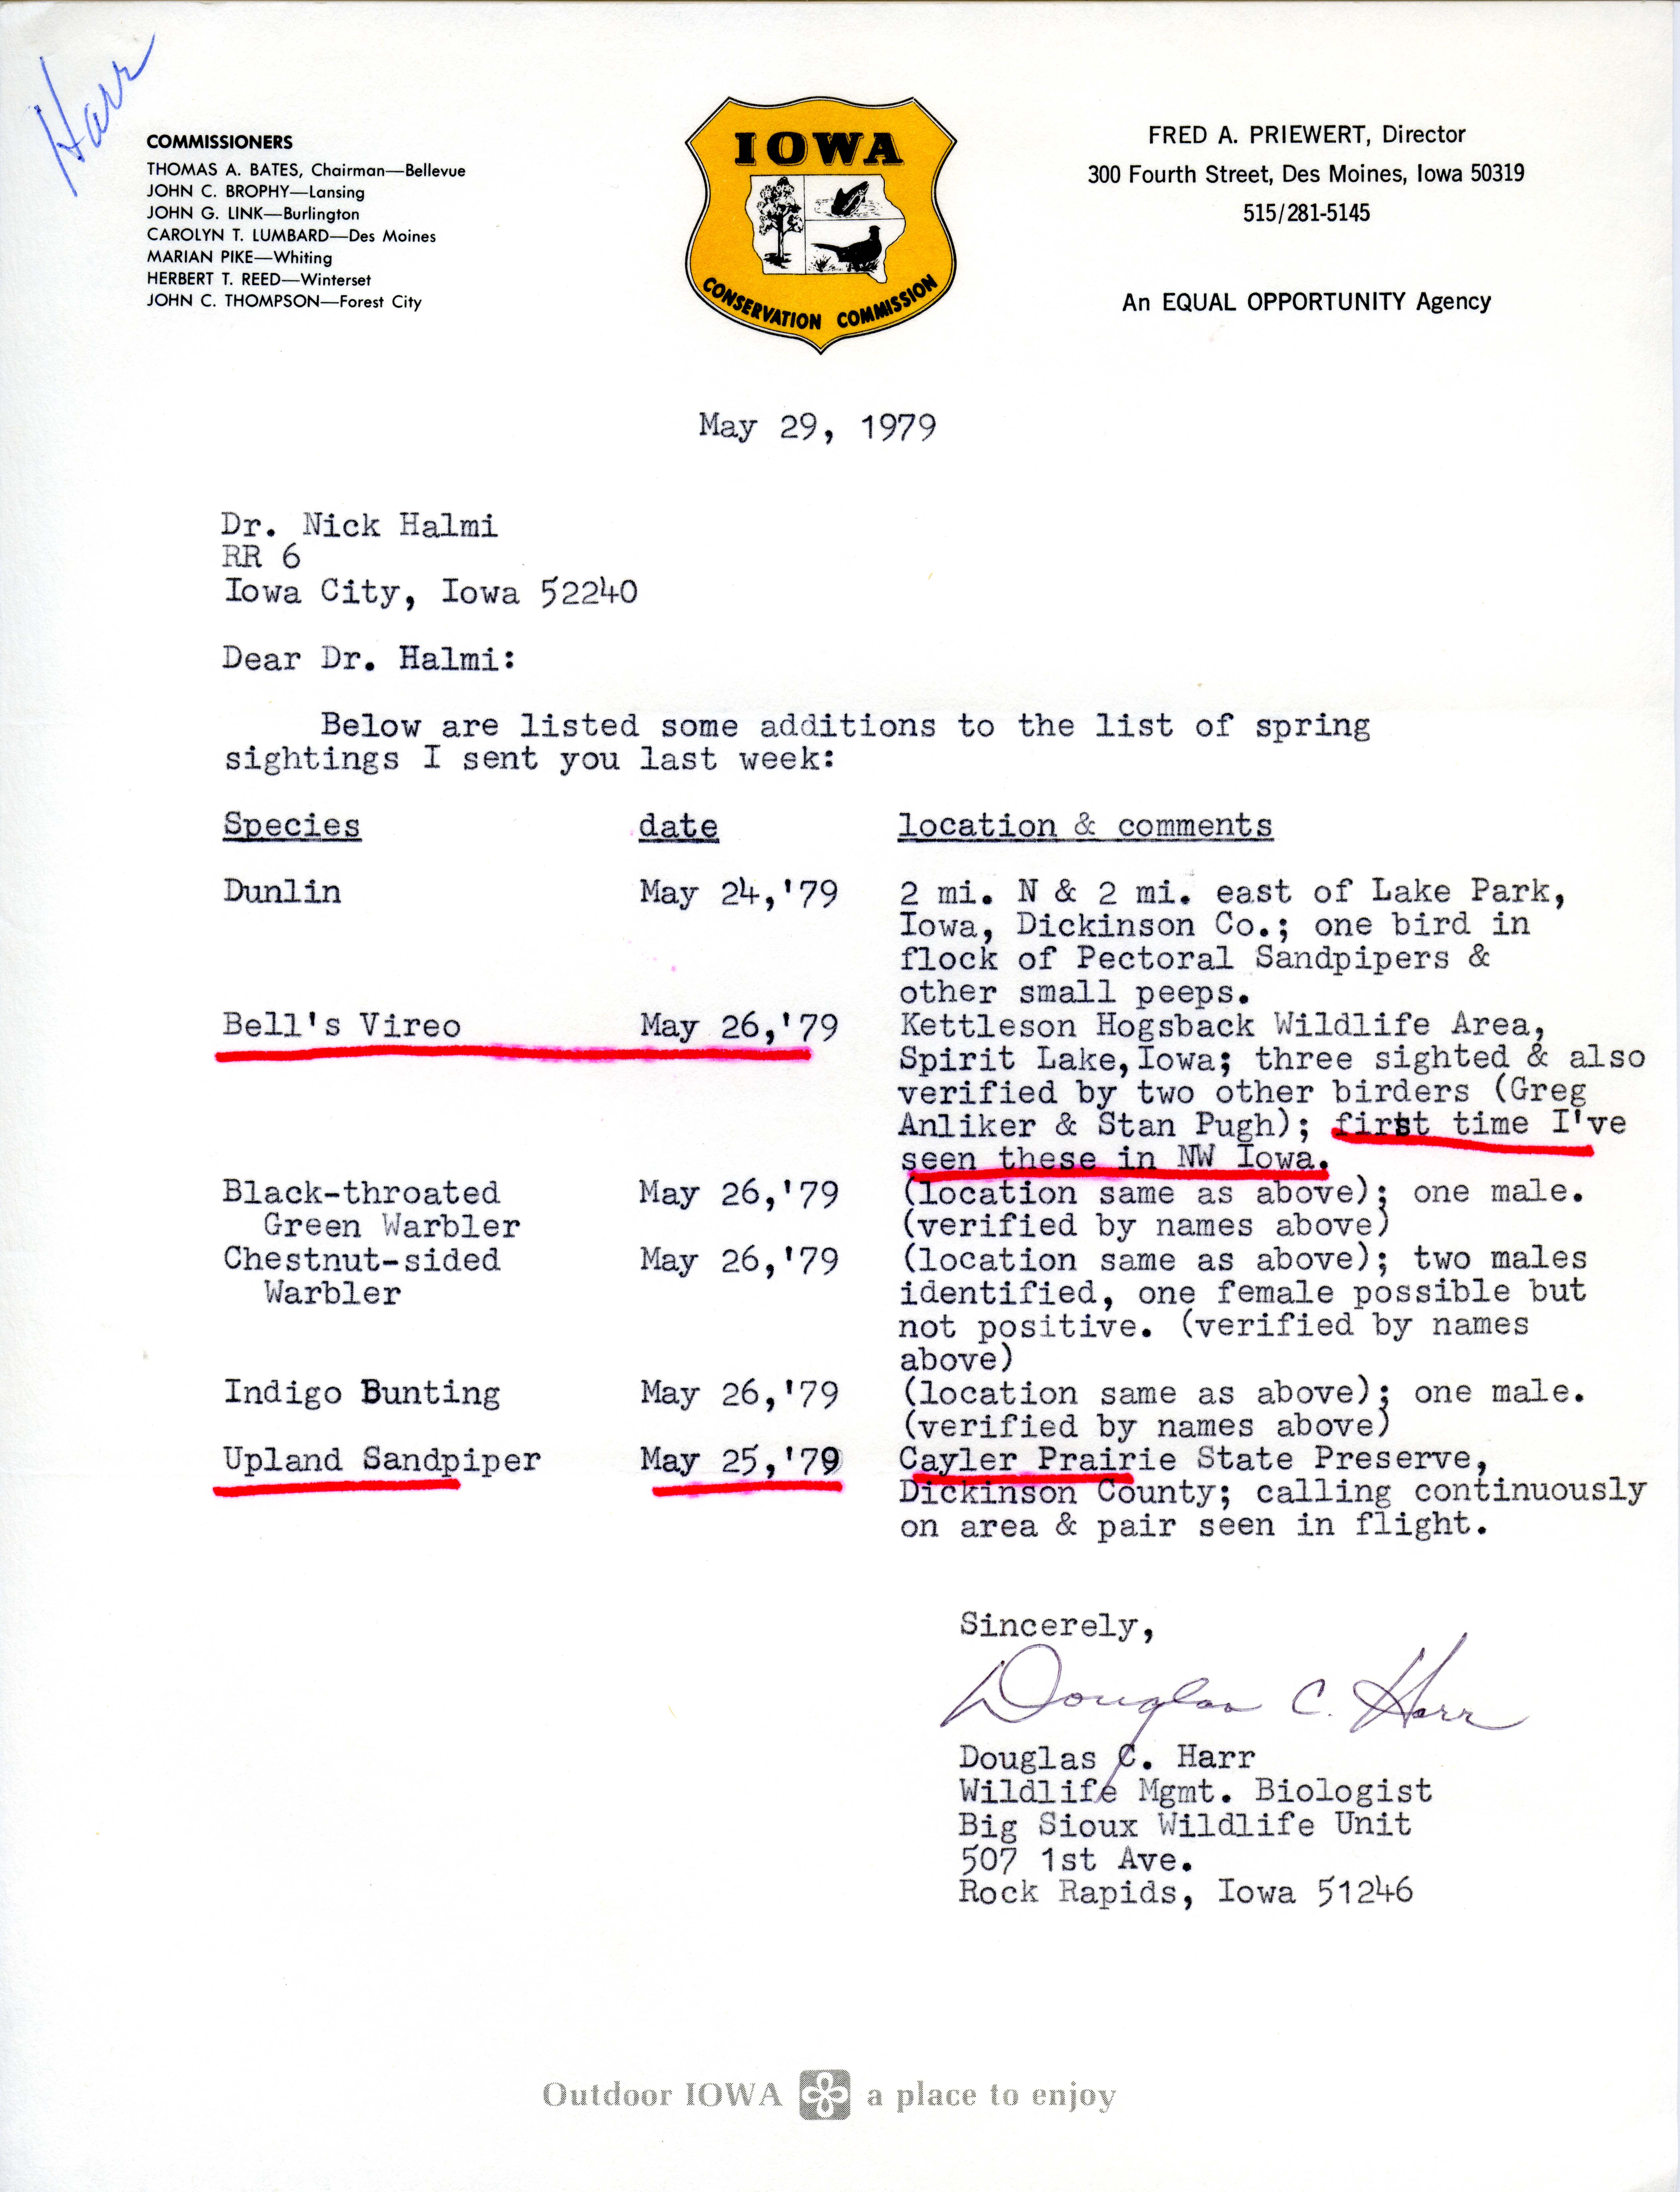 Douglas C. Harr letter to Nicholas S. Halmi regarding additional spring bird sightings, May 29, 1979